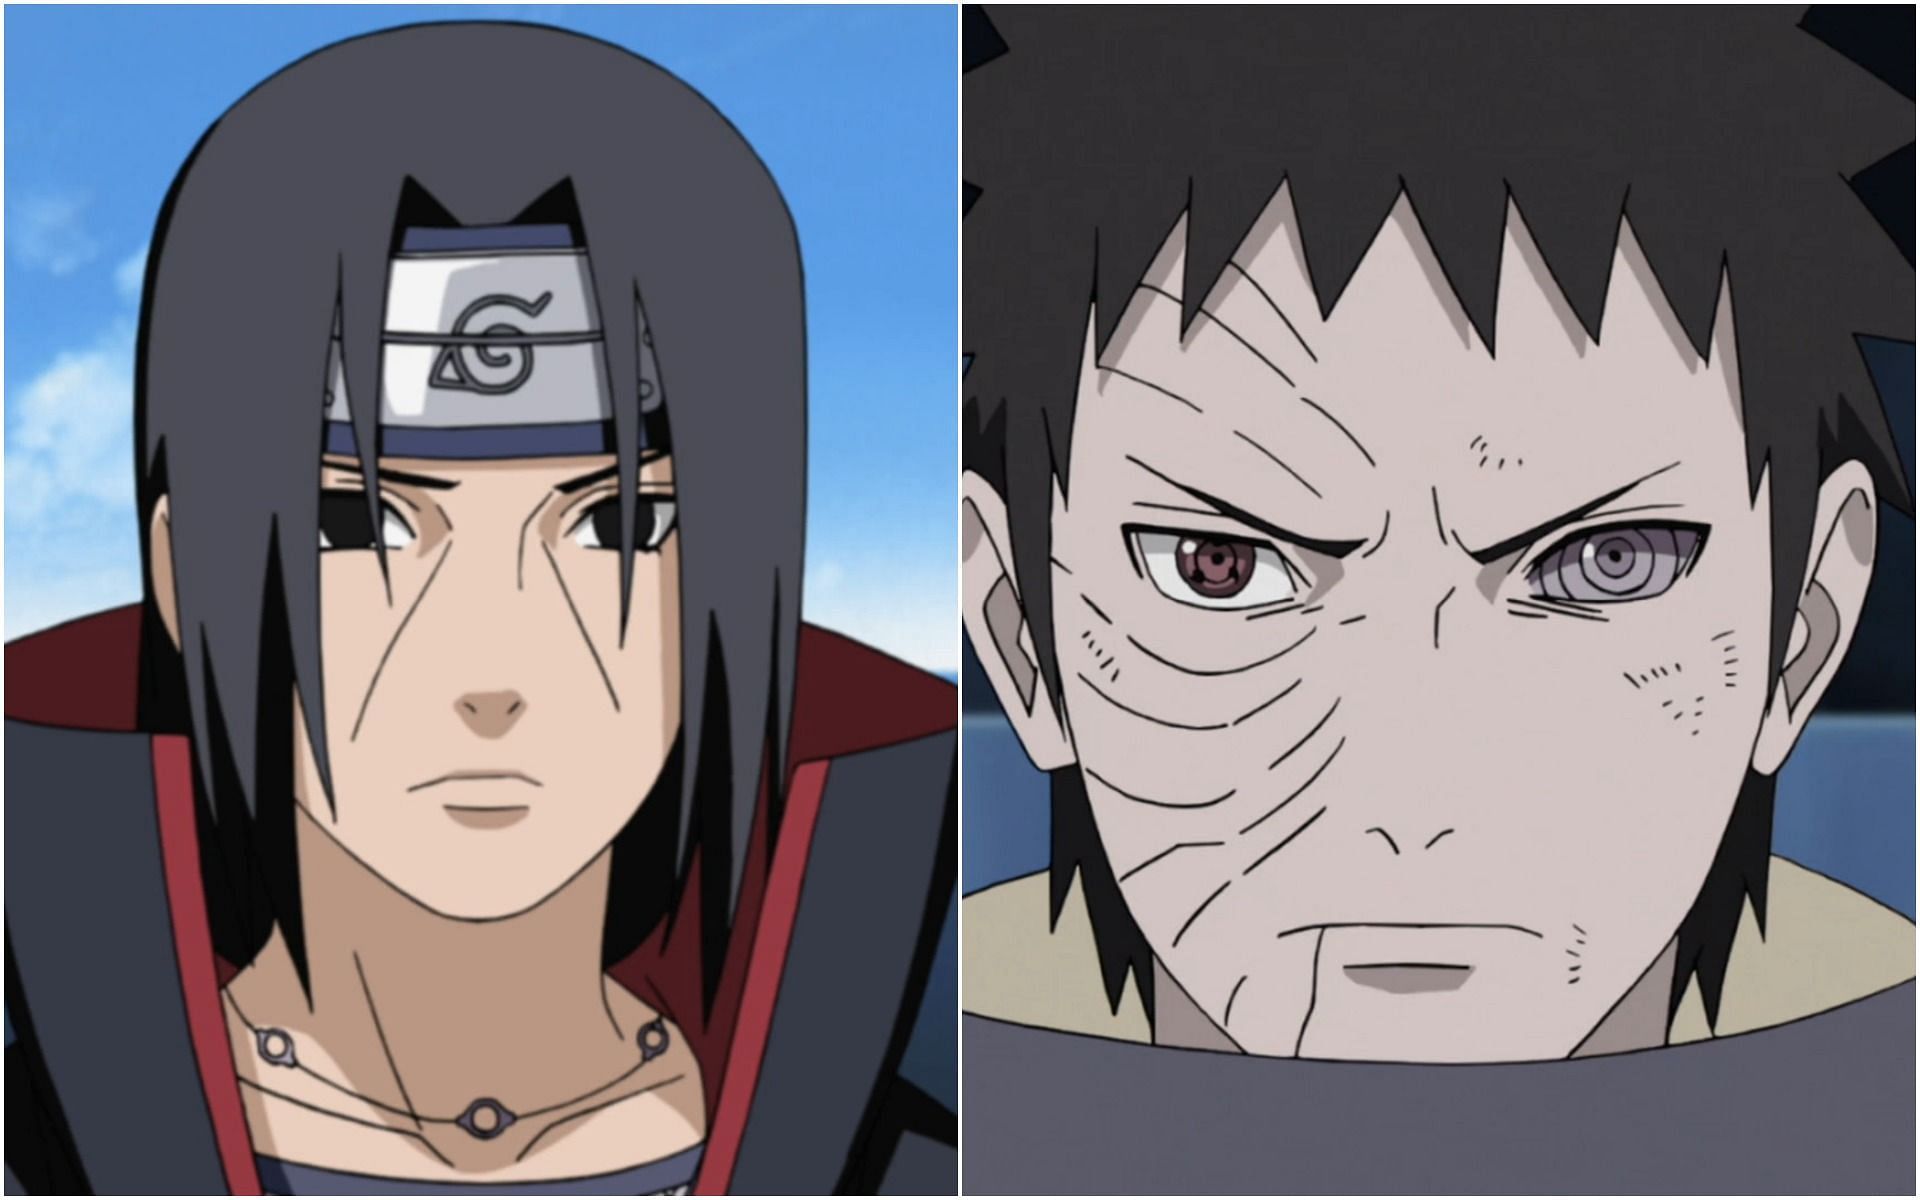 Comparing Obito and Itachi in Naruto (Images via Pierrot)